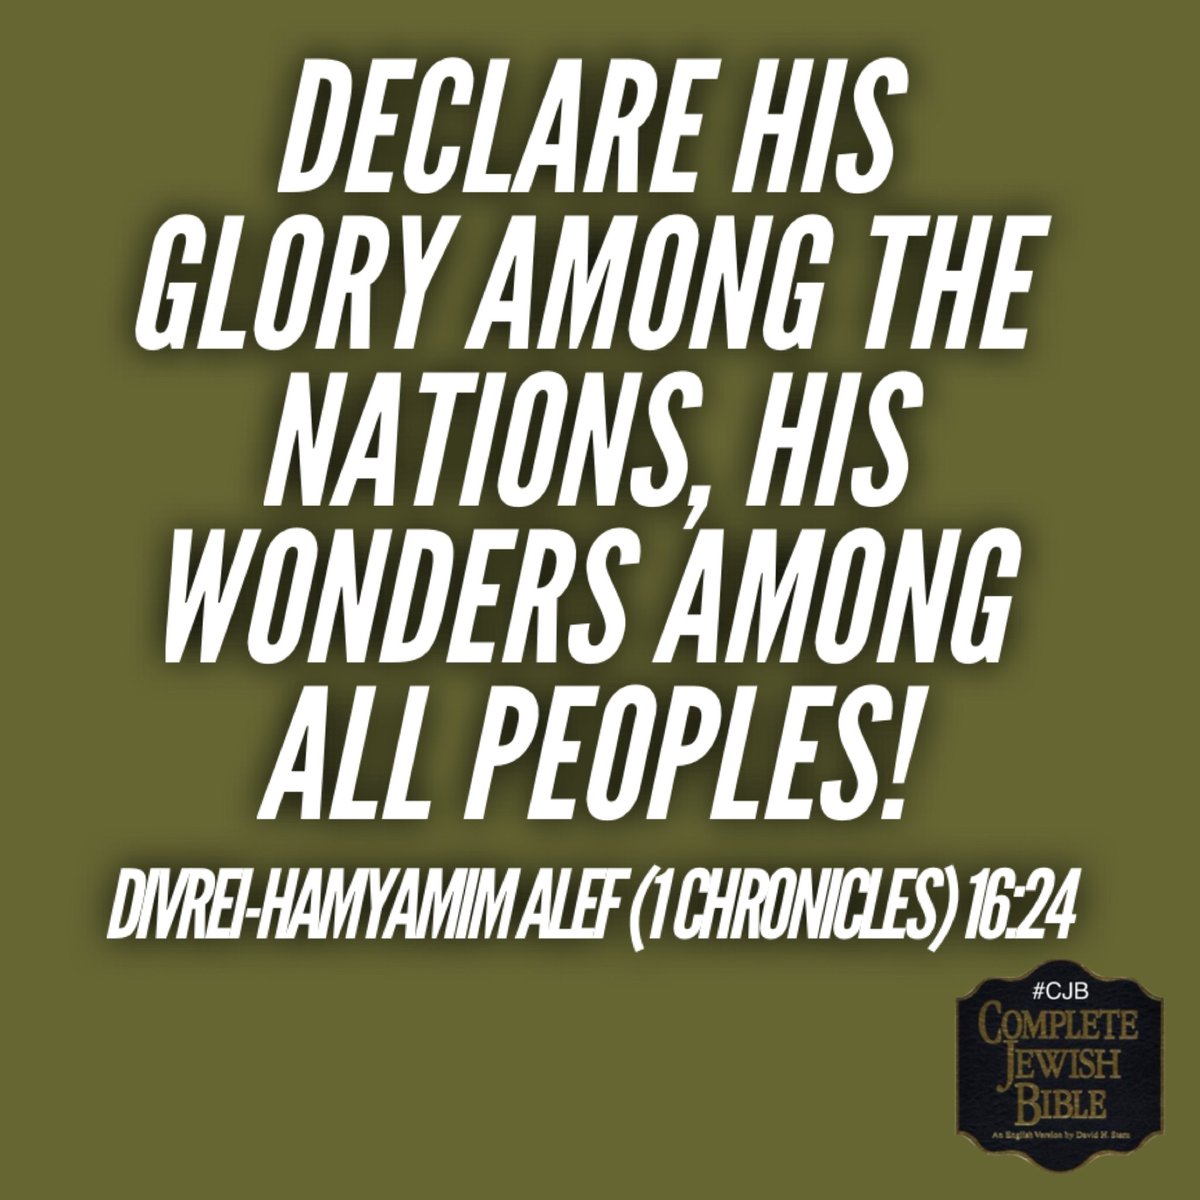 Divrei-HamYamim Alef (1 Chronicles) 16:24 #CJB #CompleteJewishBible #VerseOfTheDay